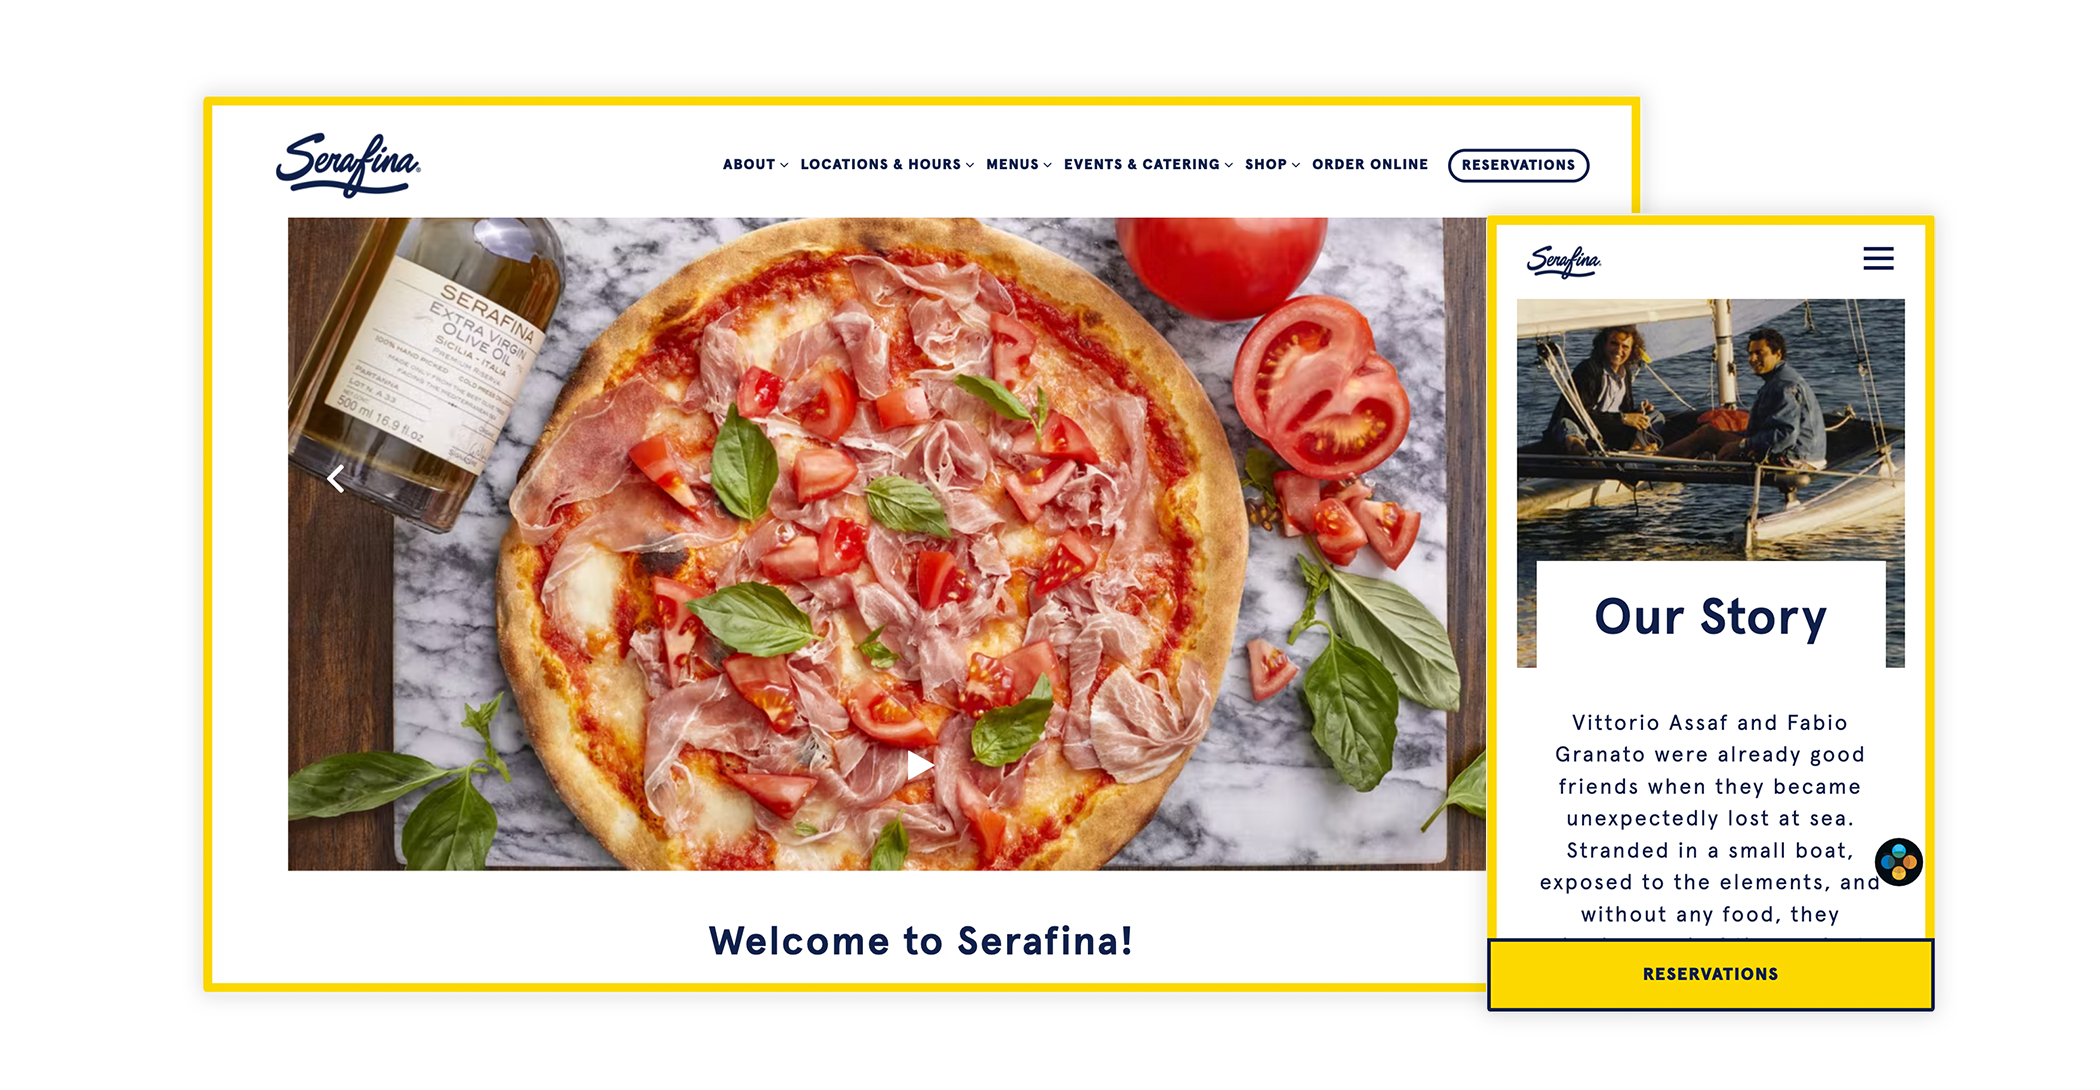 The Best Pizza Restaurant Websites of 2023